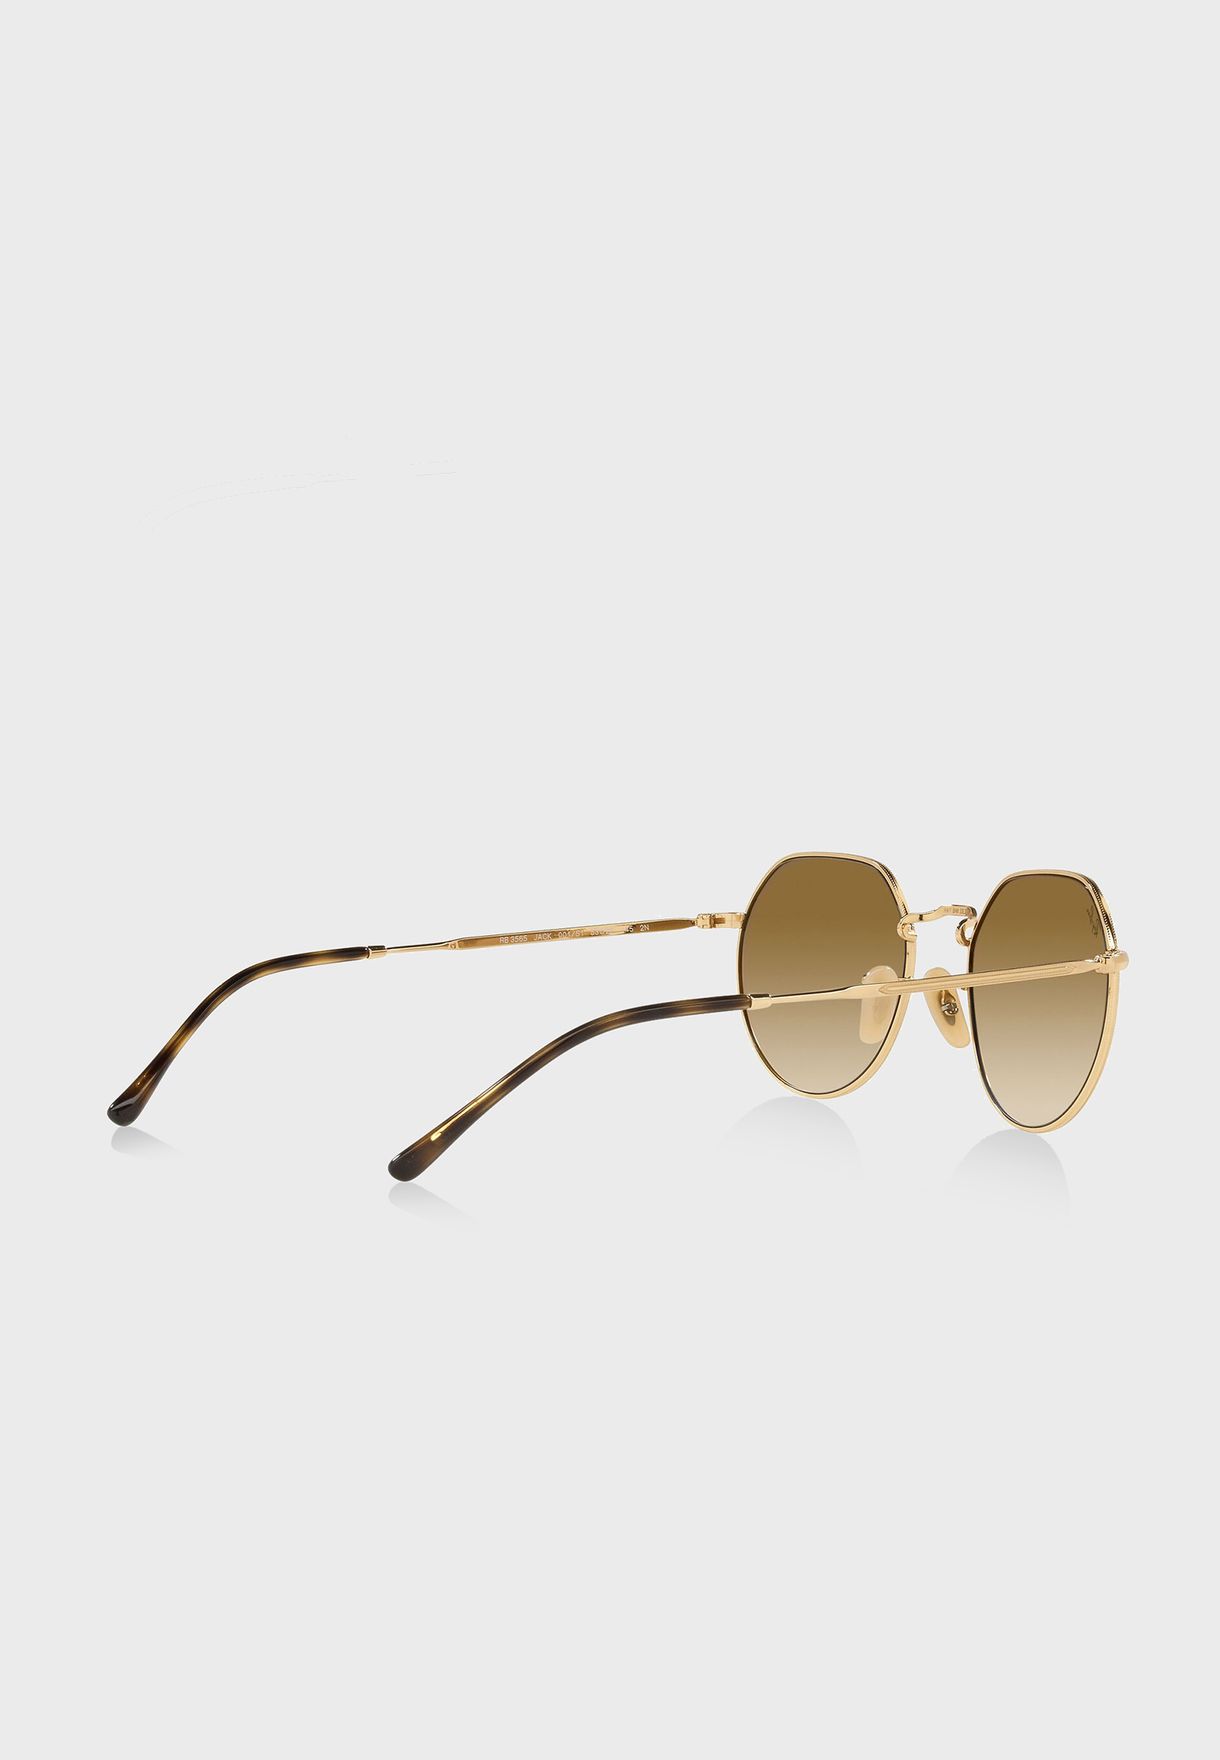 0Rb3565 Oversized Sunglasses